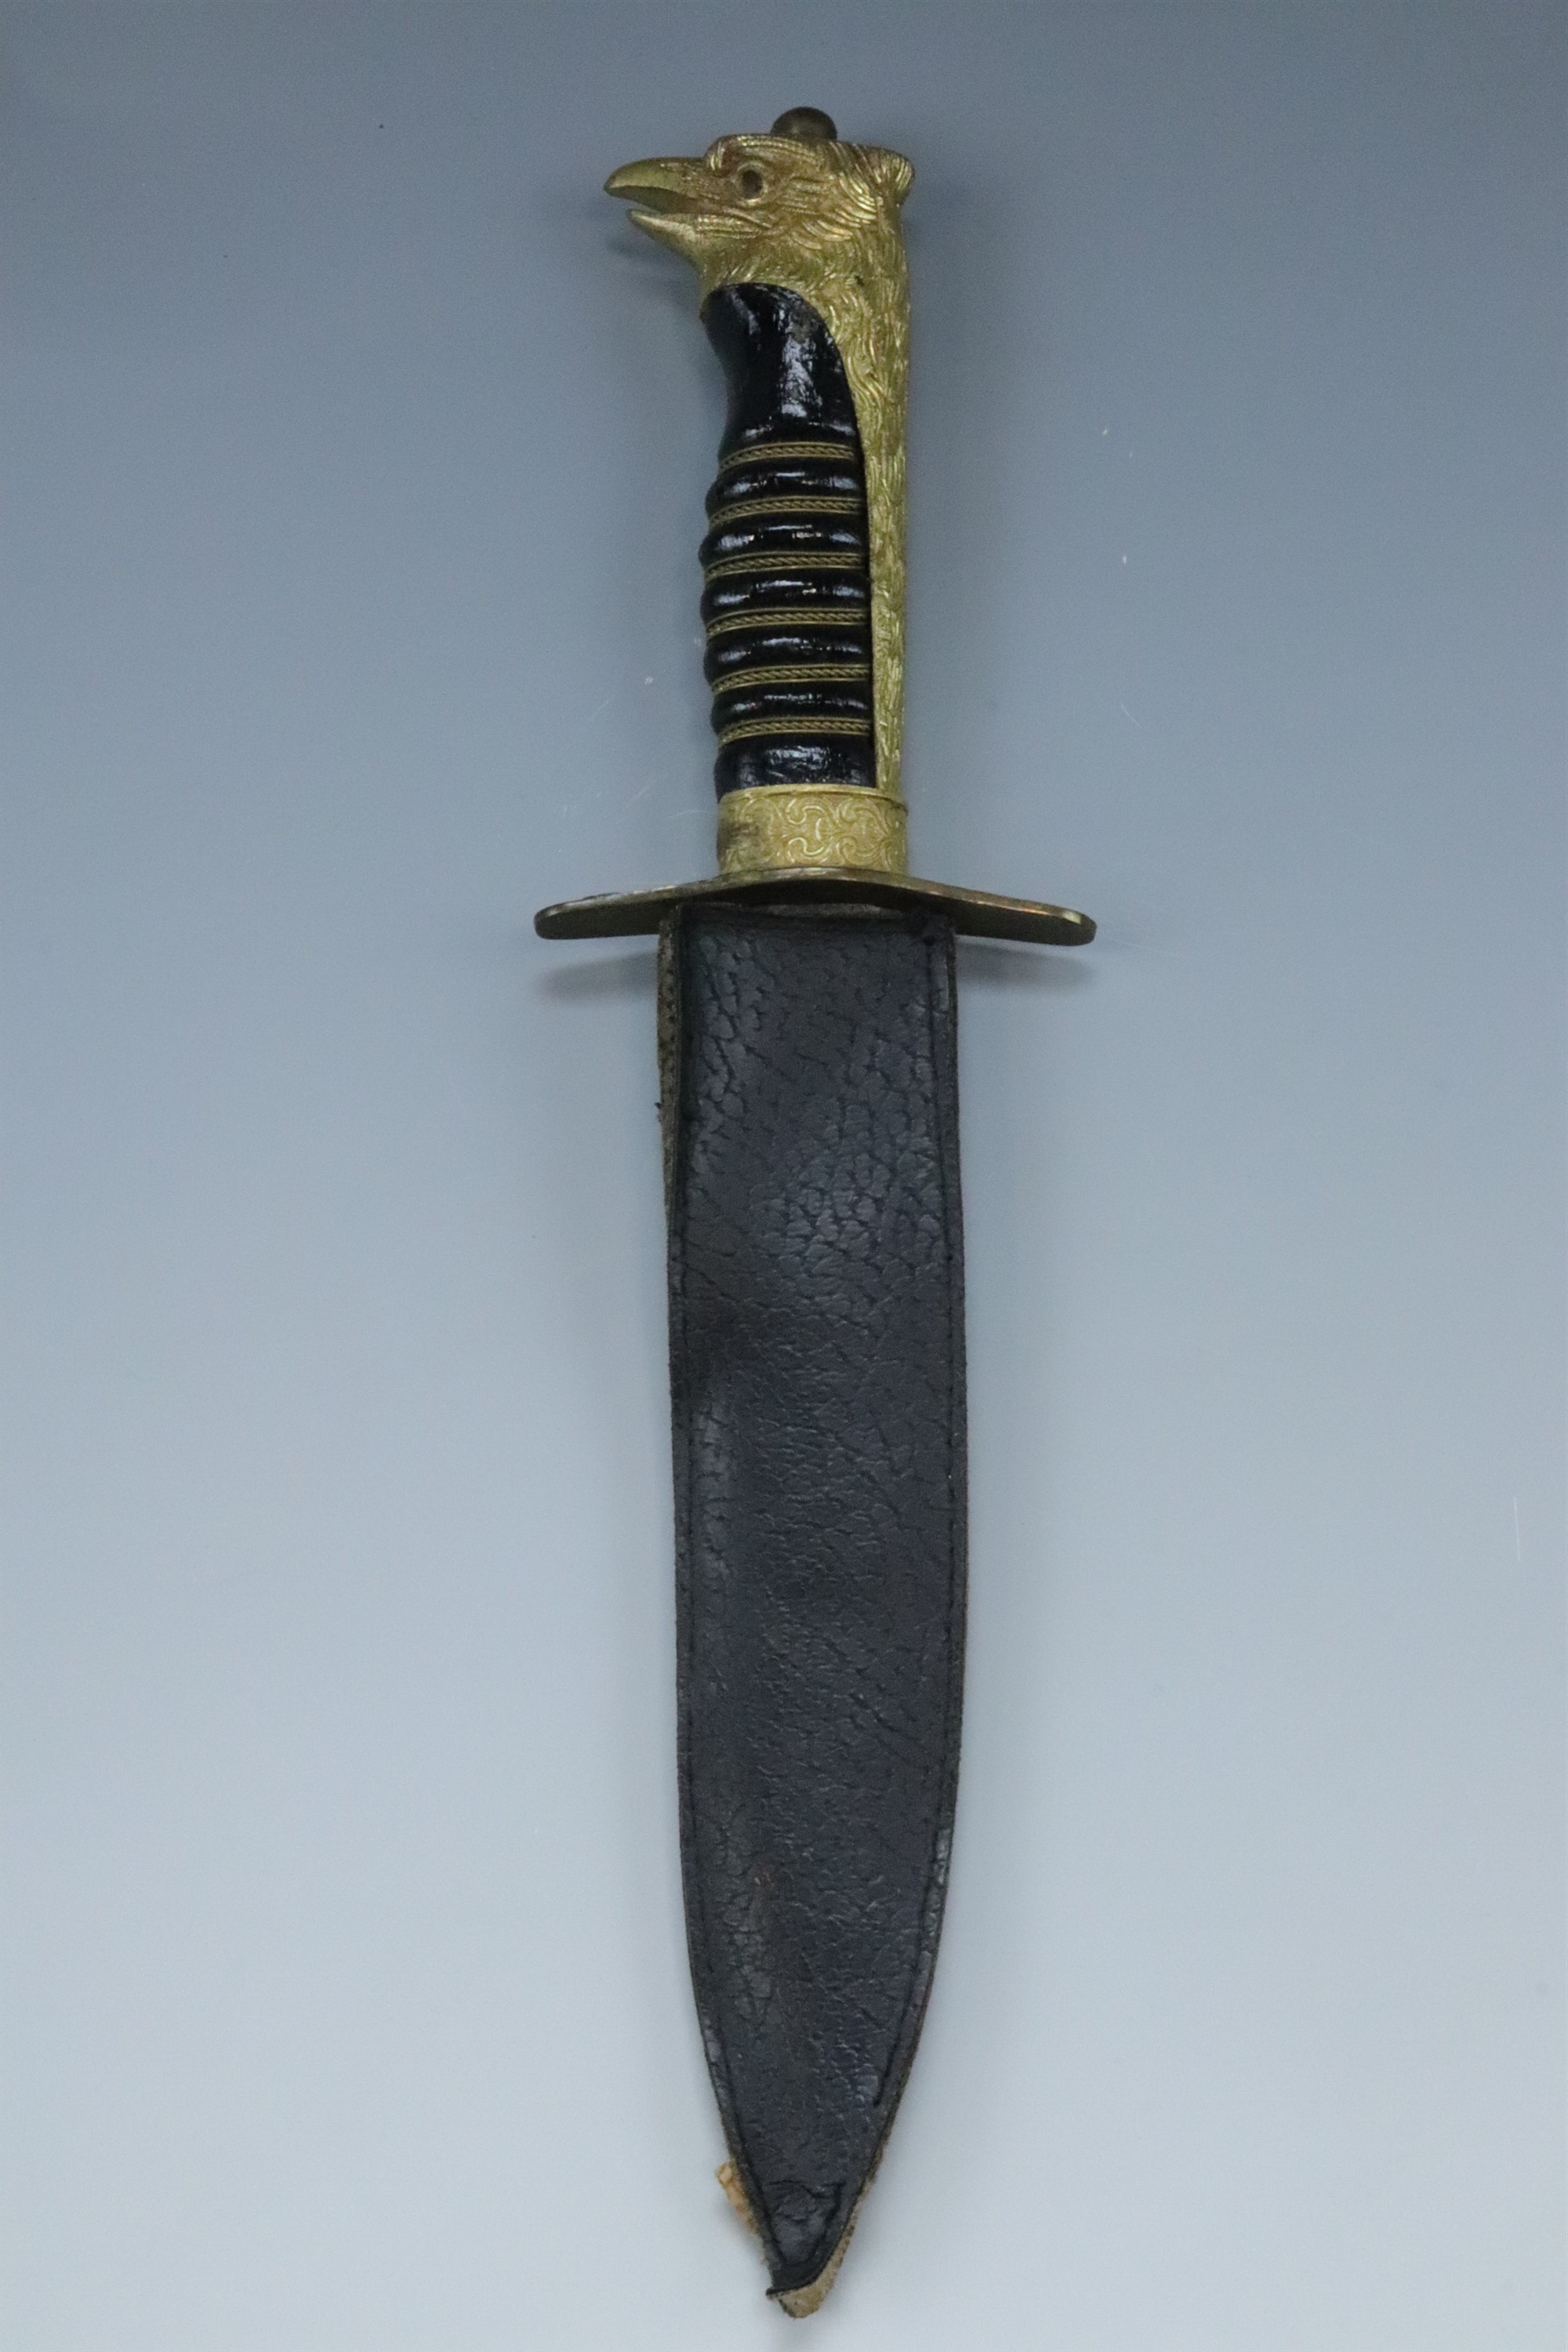 An Italian GIL / Fascist Youth dagger, 1930s - 1940s